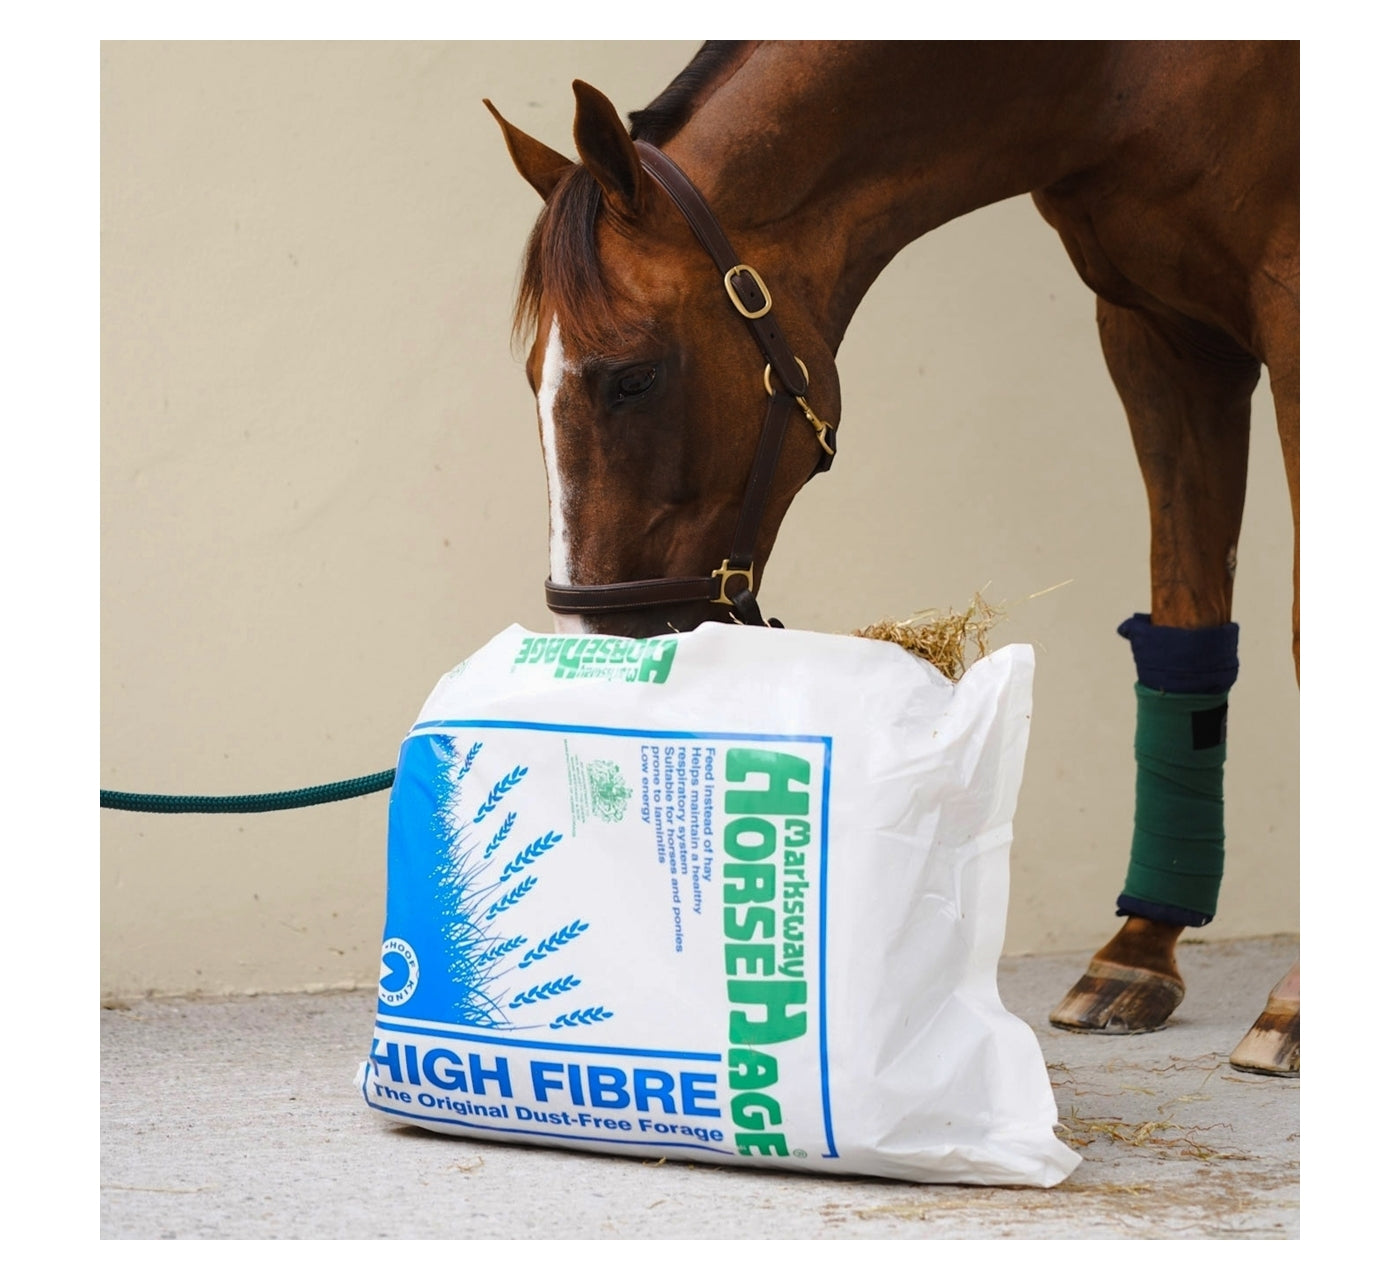 HorseHage High Fibre (Blue) | Horse Feed - Buy Online SPR Centre UK